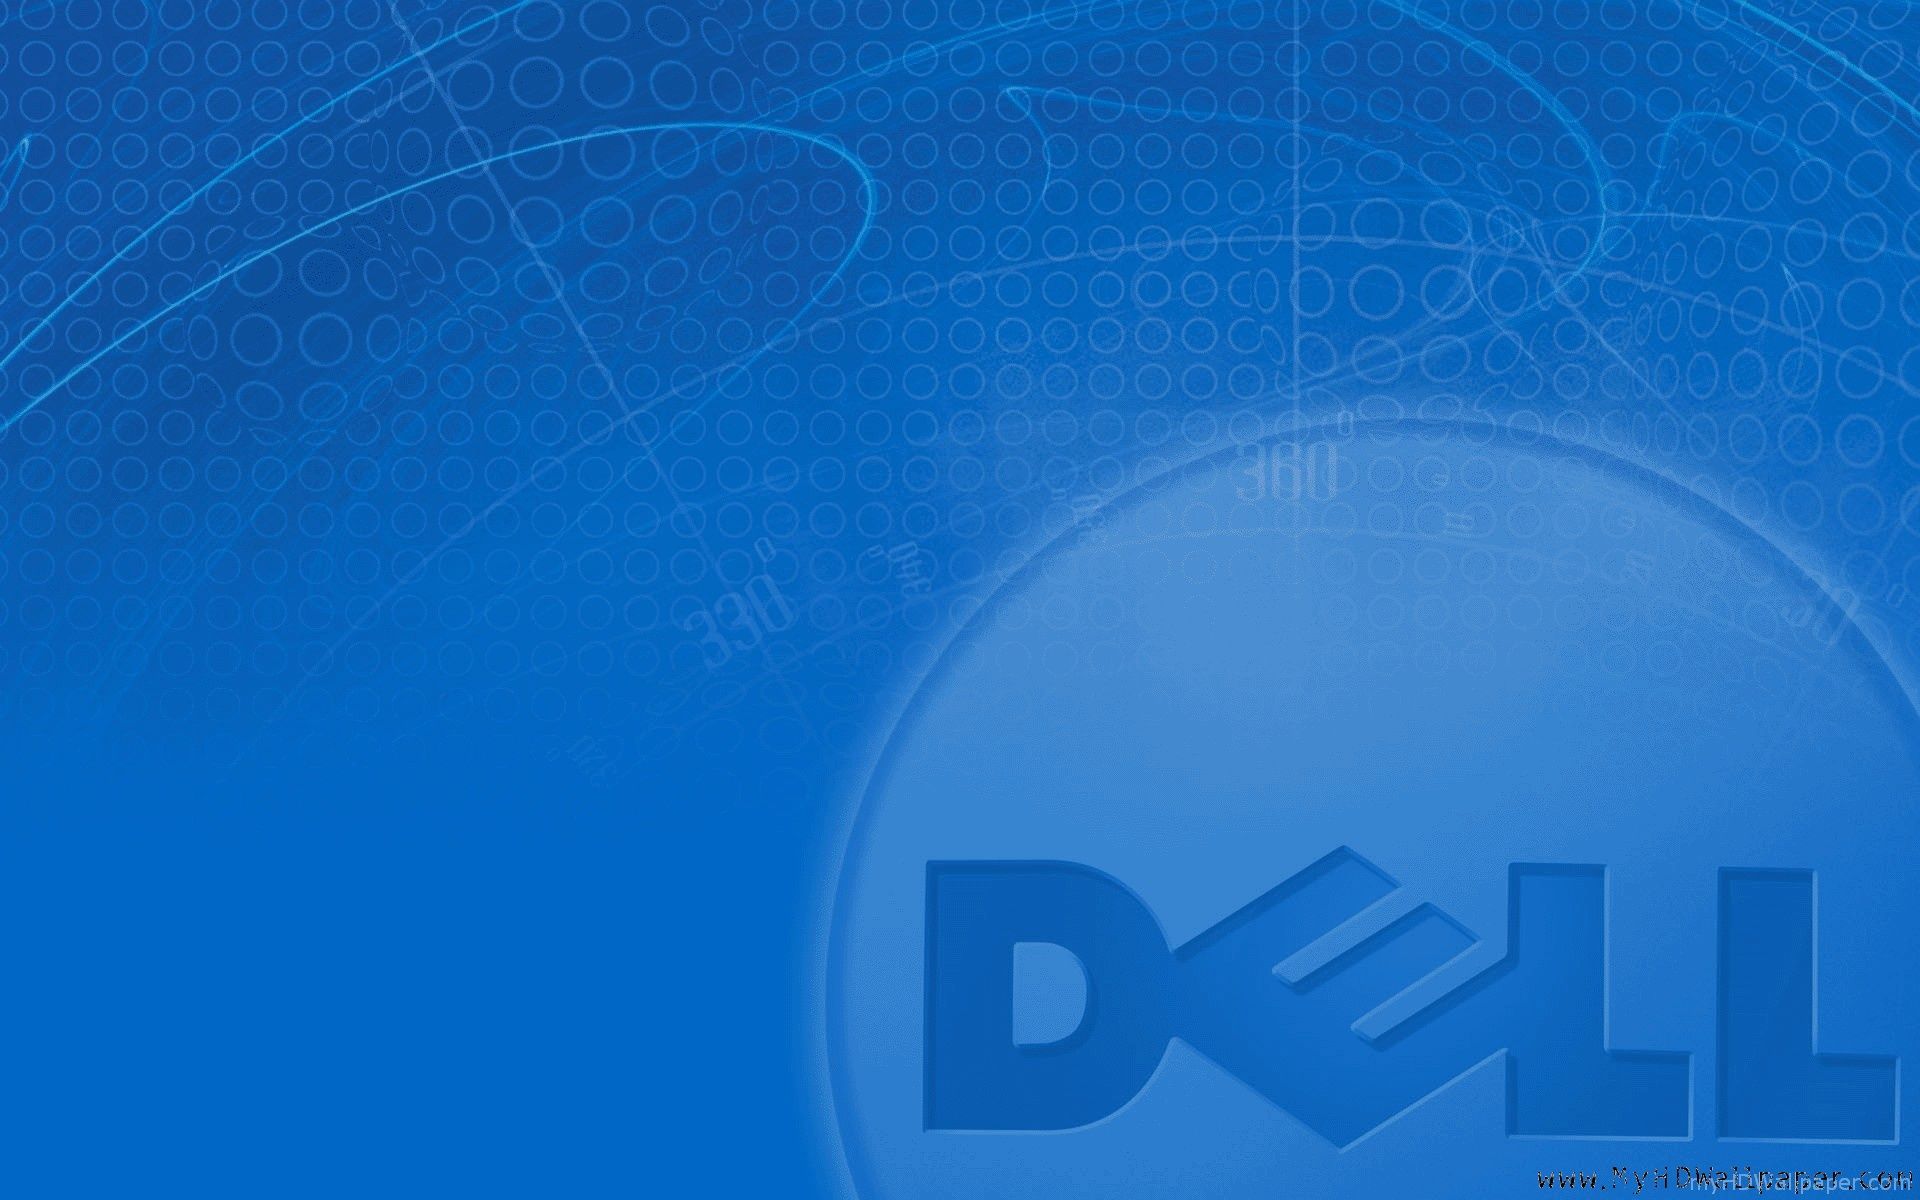 Dell Desktop Background - wallpaper